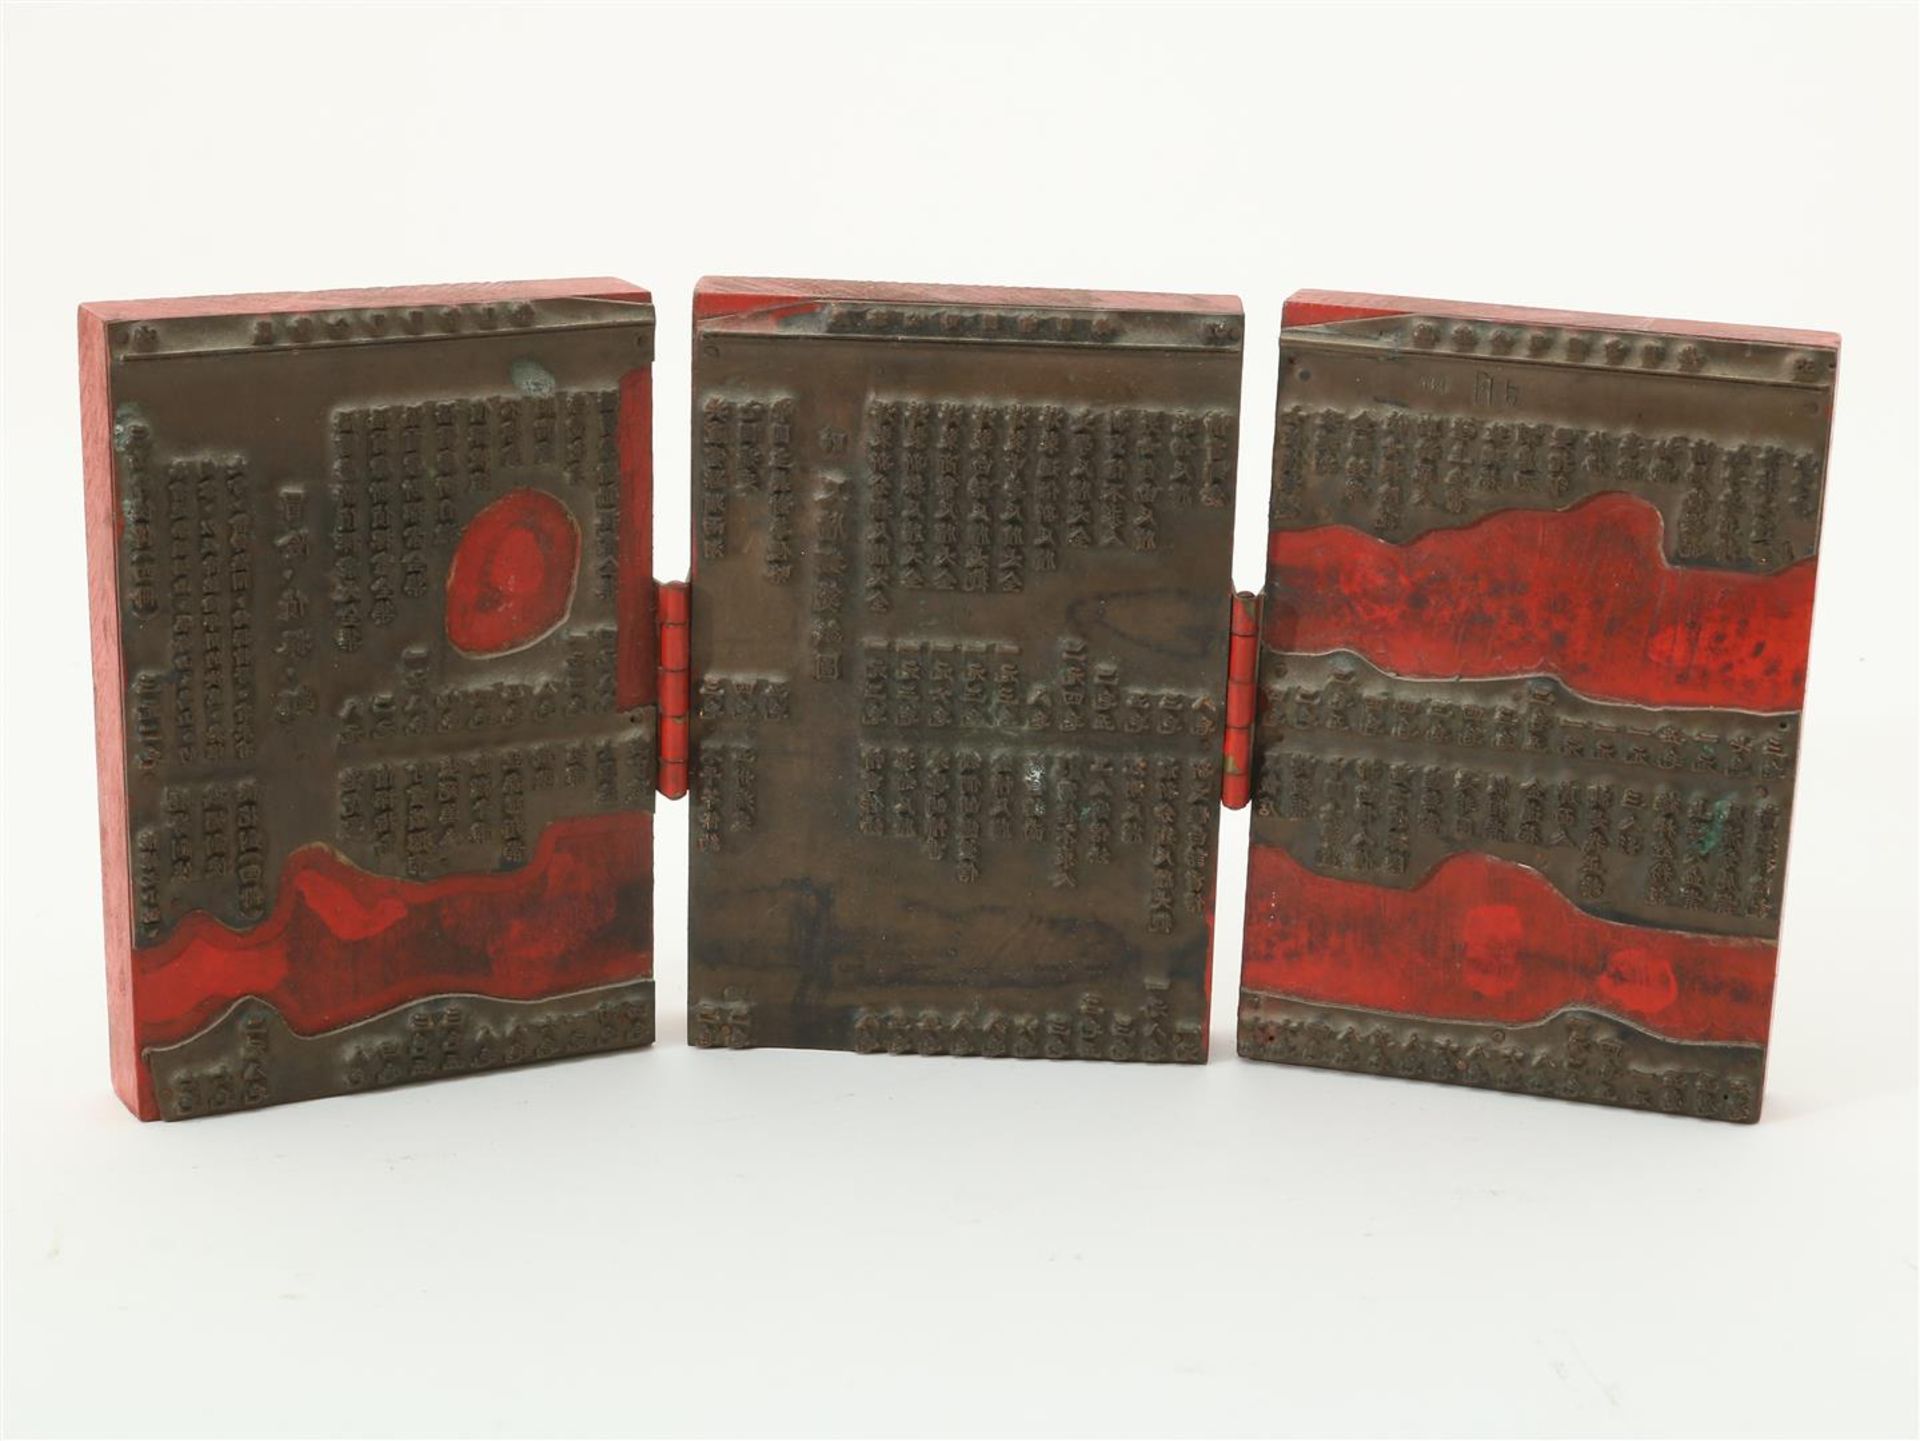 Chinese printing plates